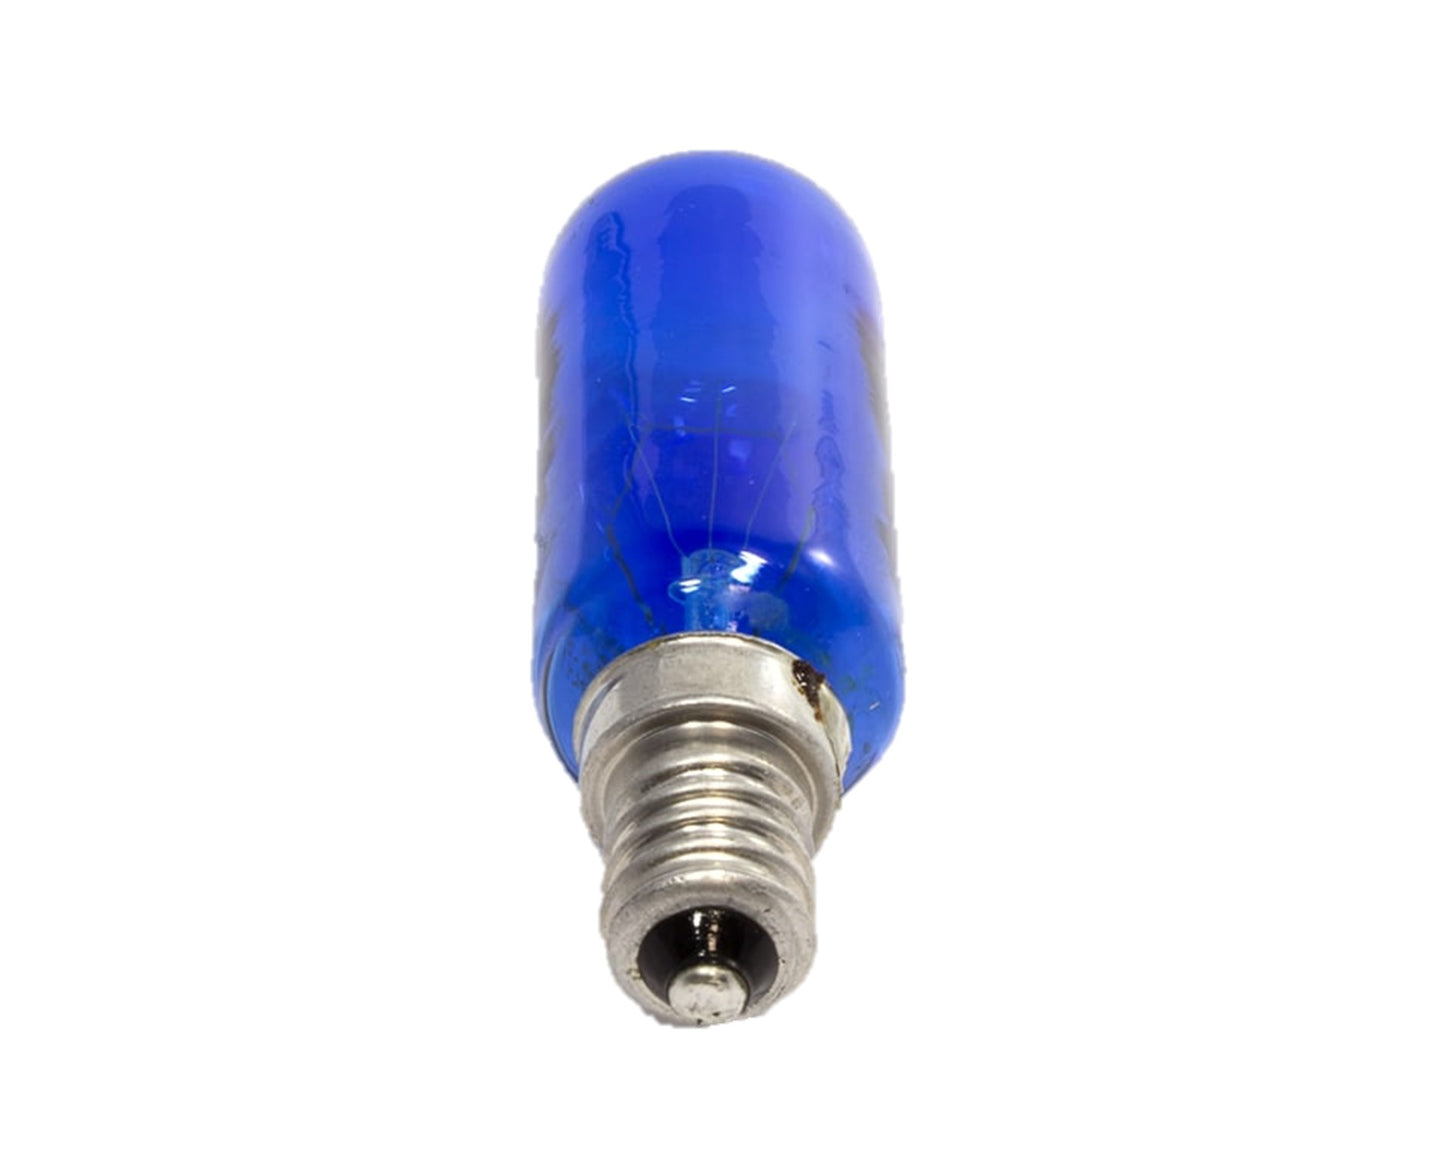 Refrigerator Fridge Lamp Bulb for Miele Gaggenau Fridge Freezer 25W E14 SES Blue 612235, 00625325